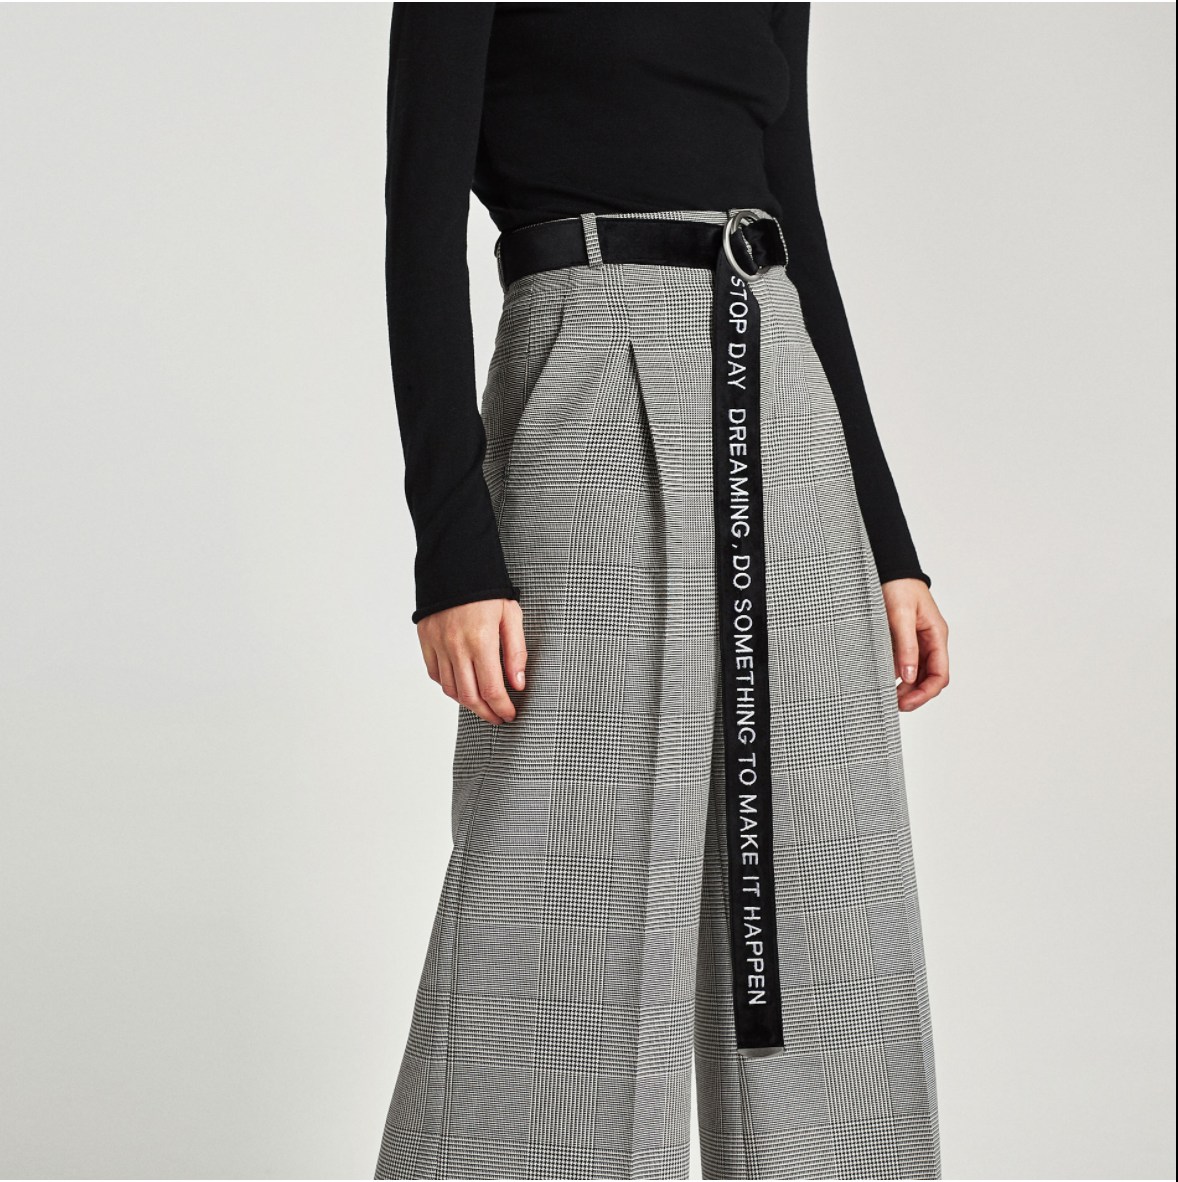 Zara, Extra Long Belt with Slogan, $22.90